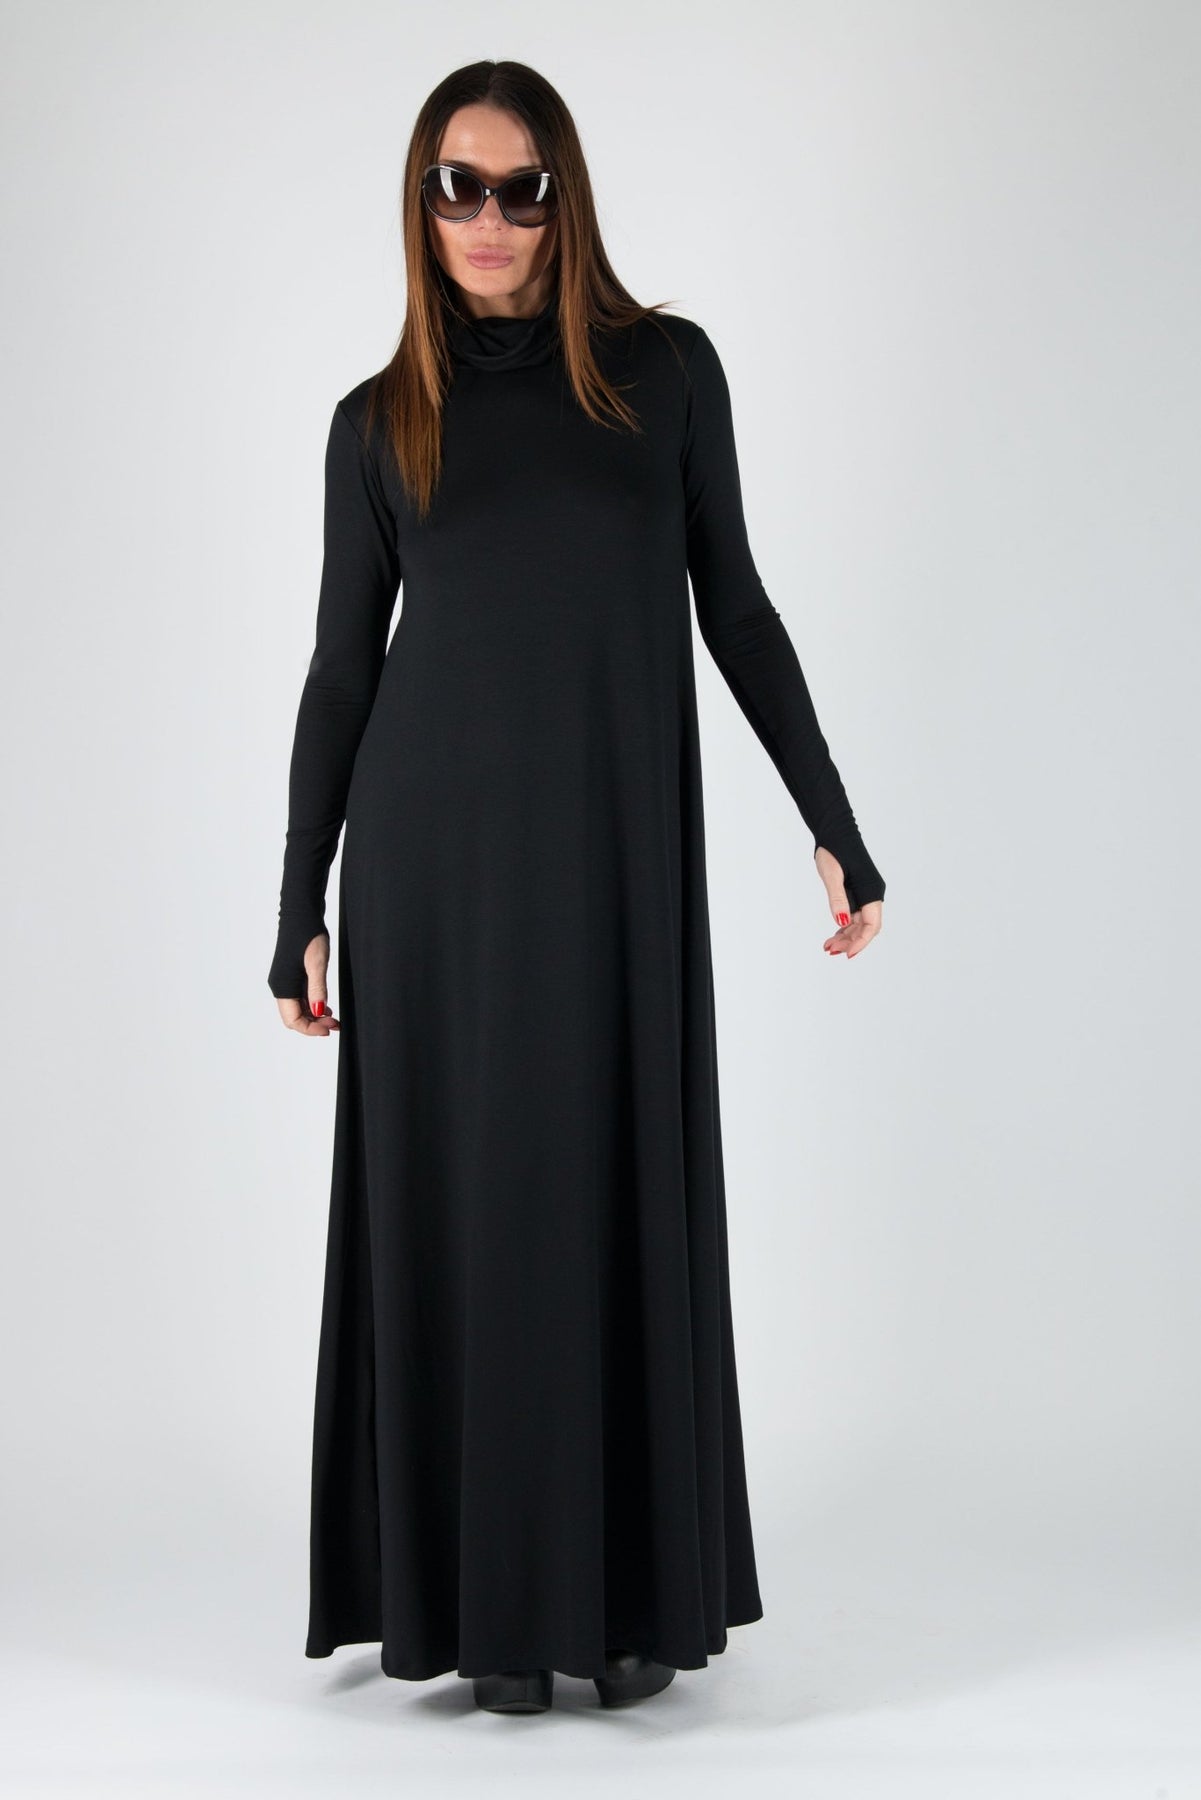 Shop Turtleneck Long Dress VERONICA for Women | EUG FASHION